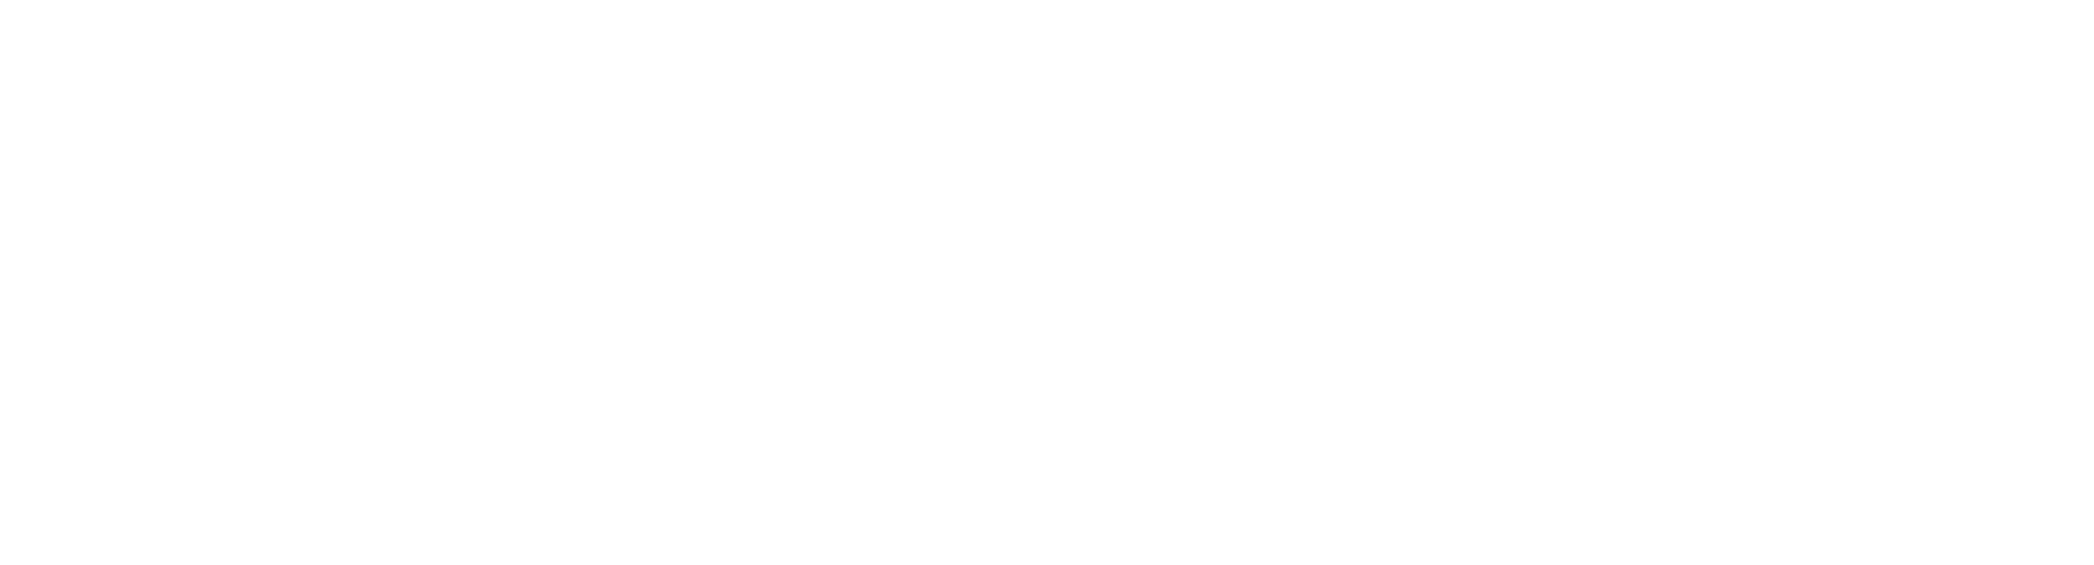 Apple design awards - Delight and Fun Finalist